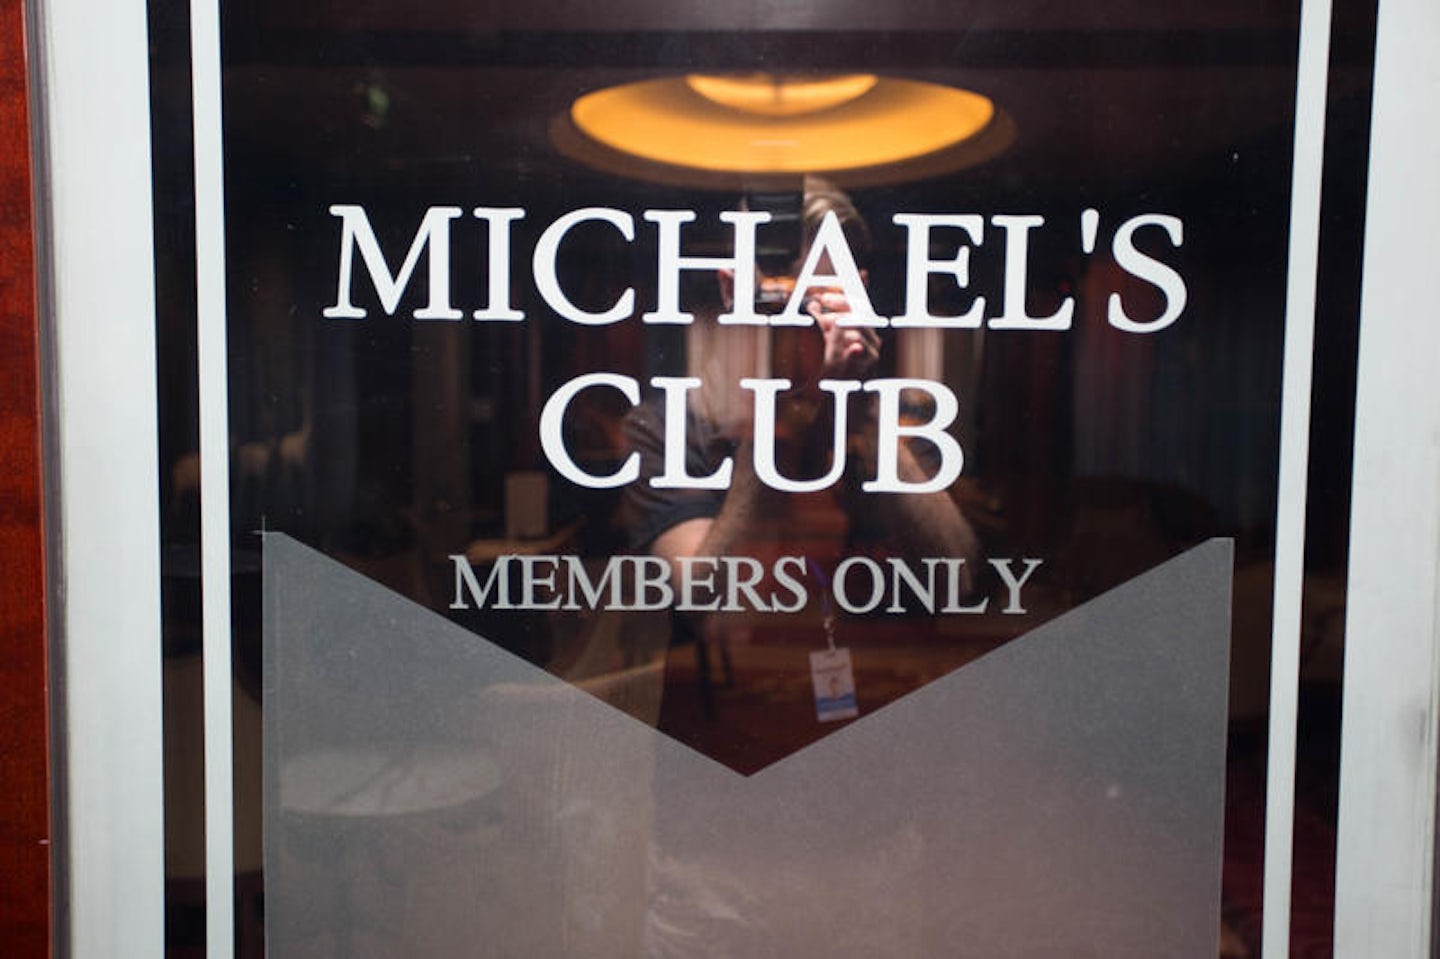 Michael's Club